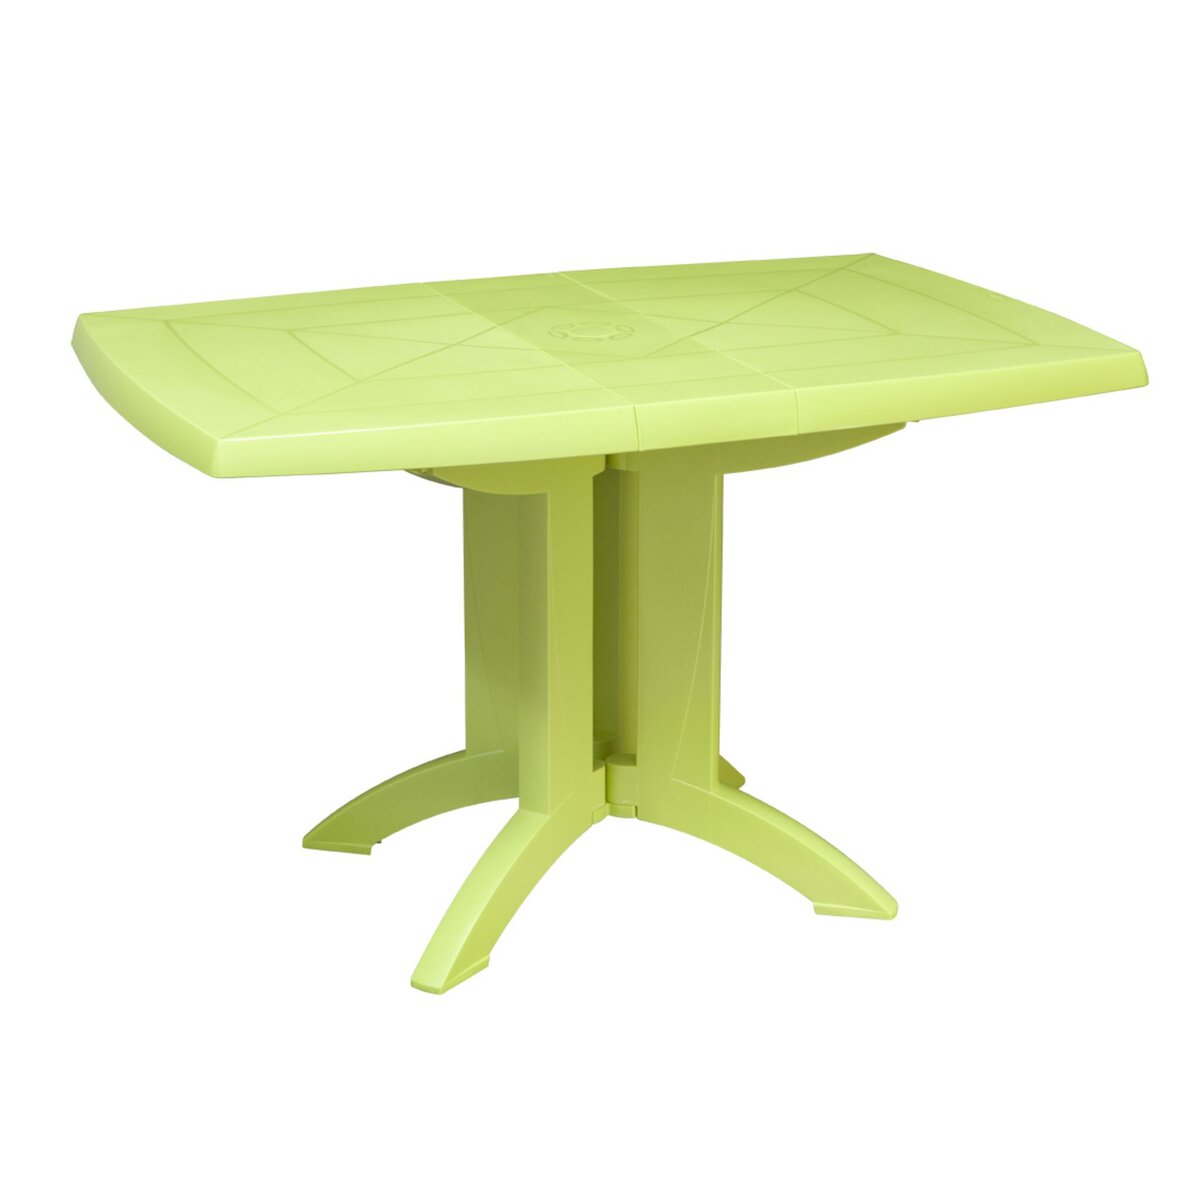 GROSFILLEX Table pliante VEGA 118X77cm